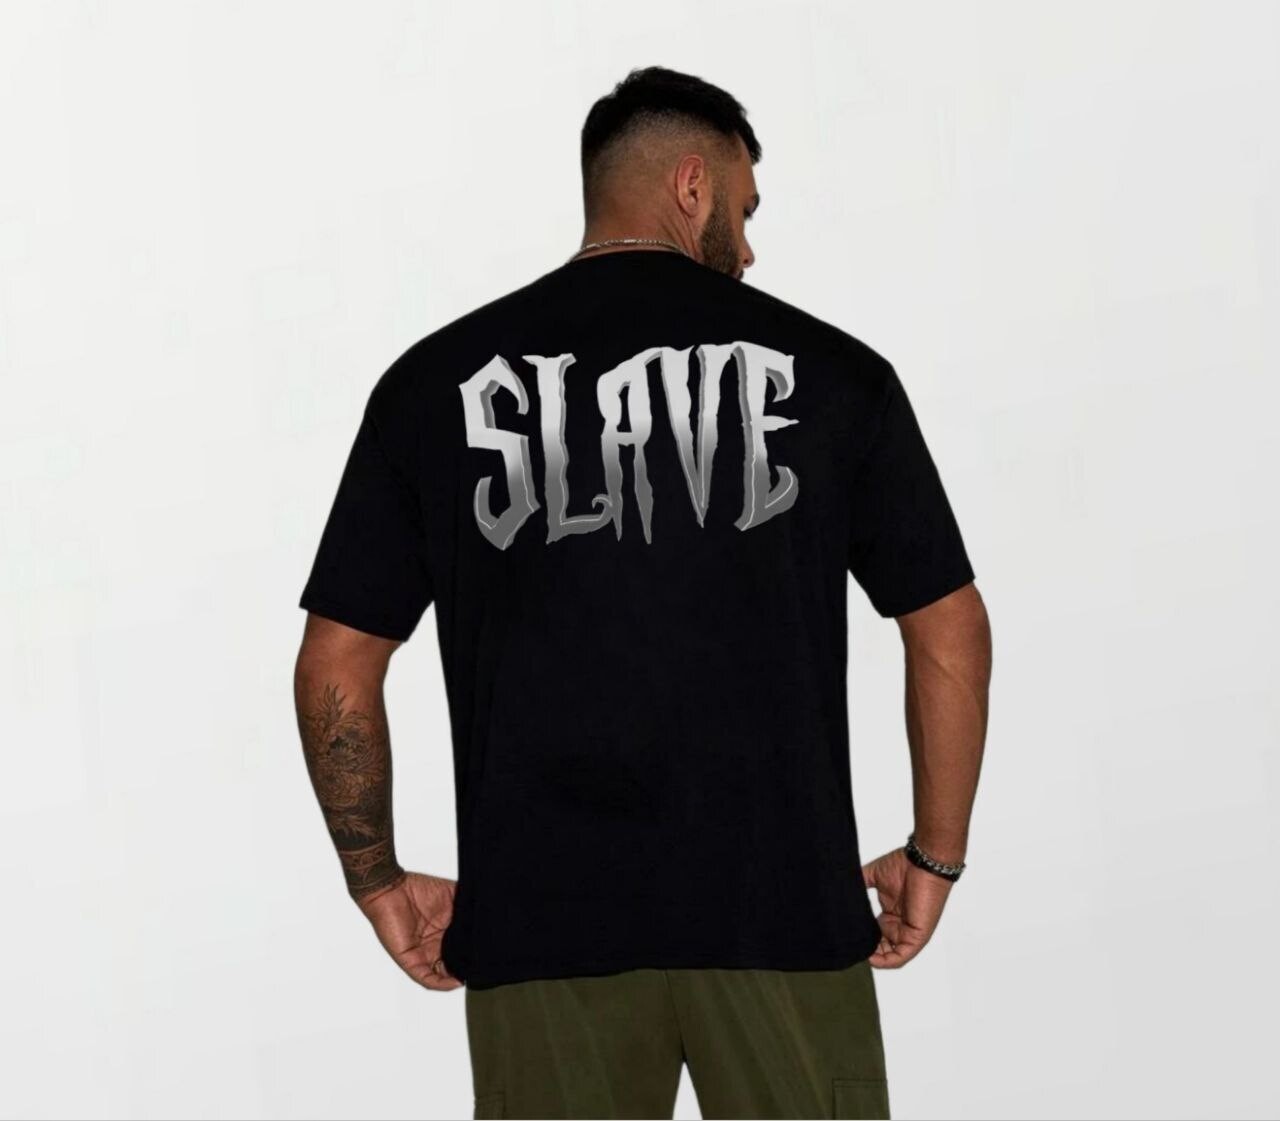 Slave_Elite Tee black